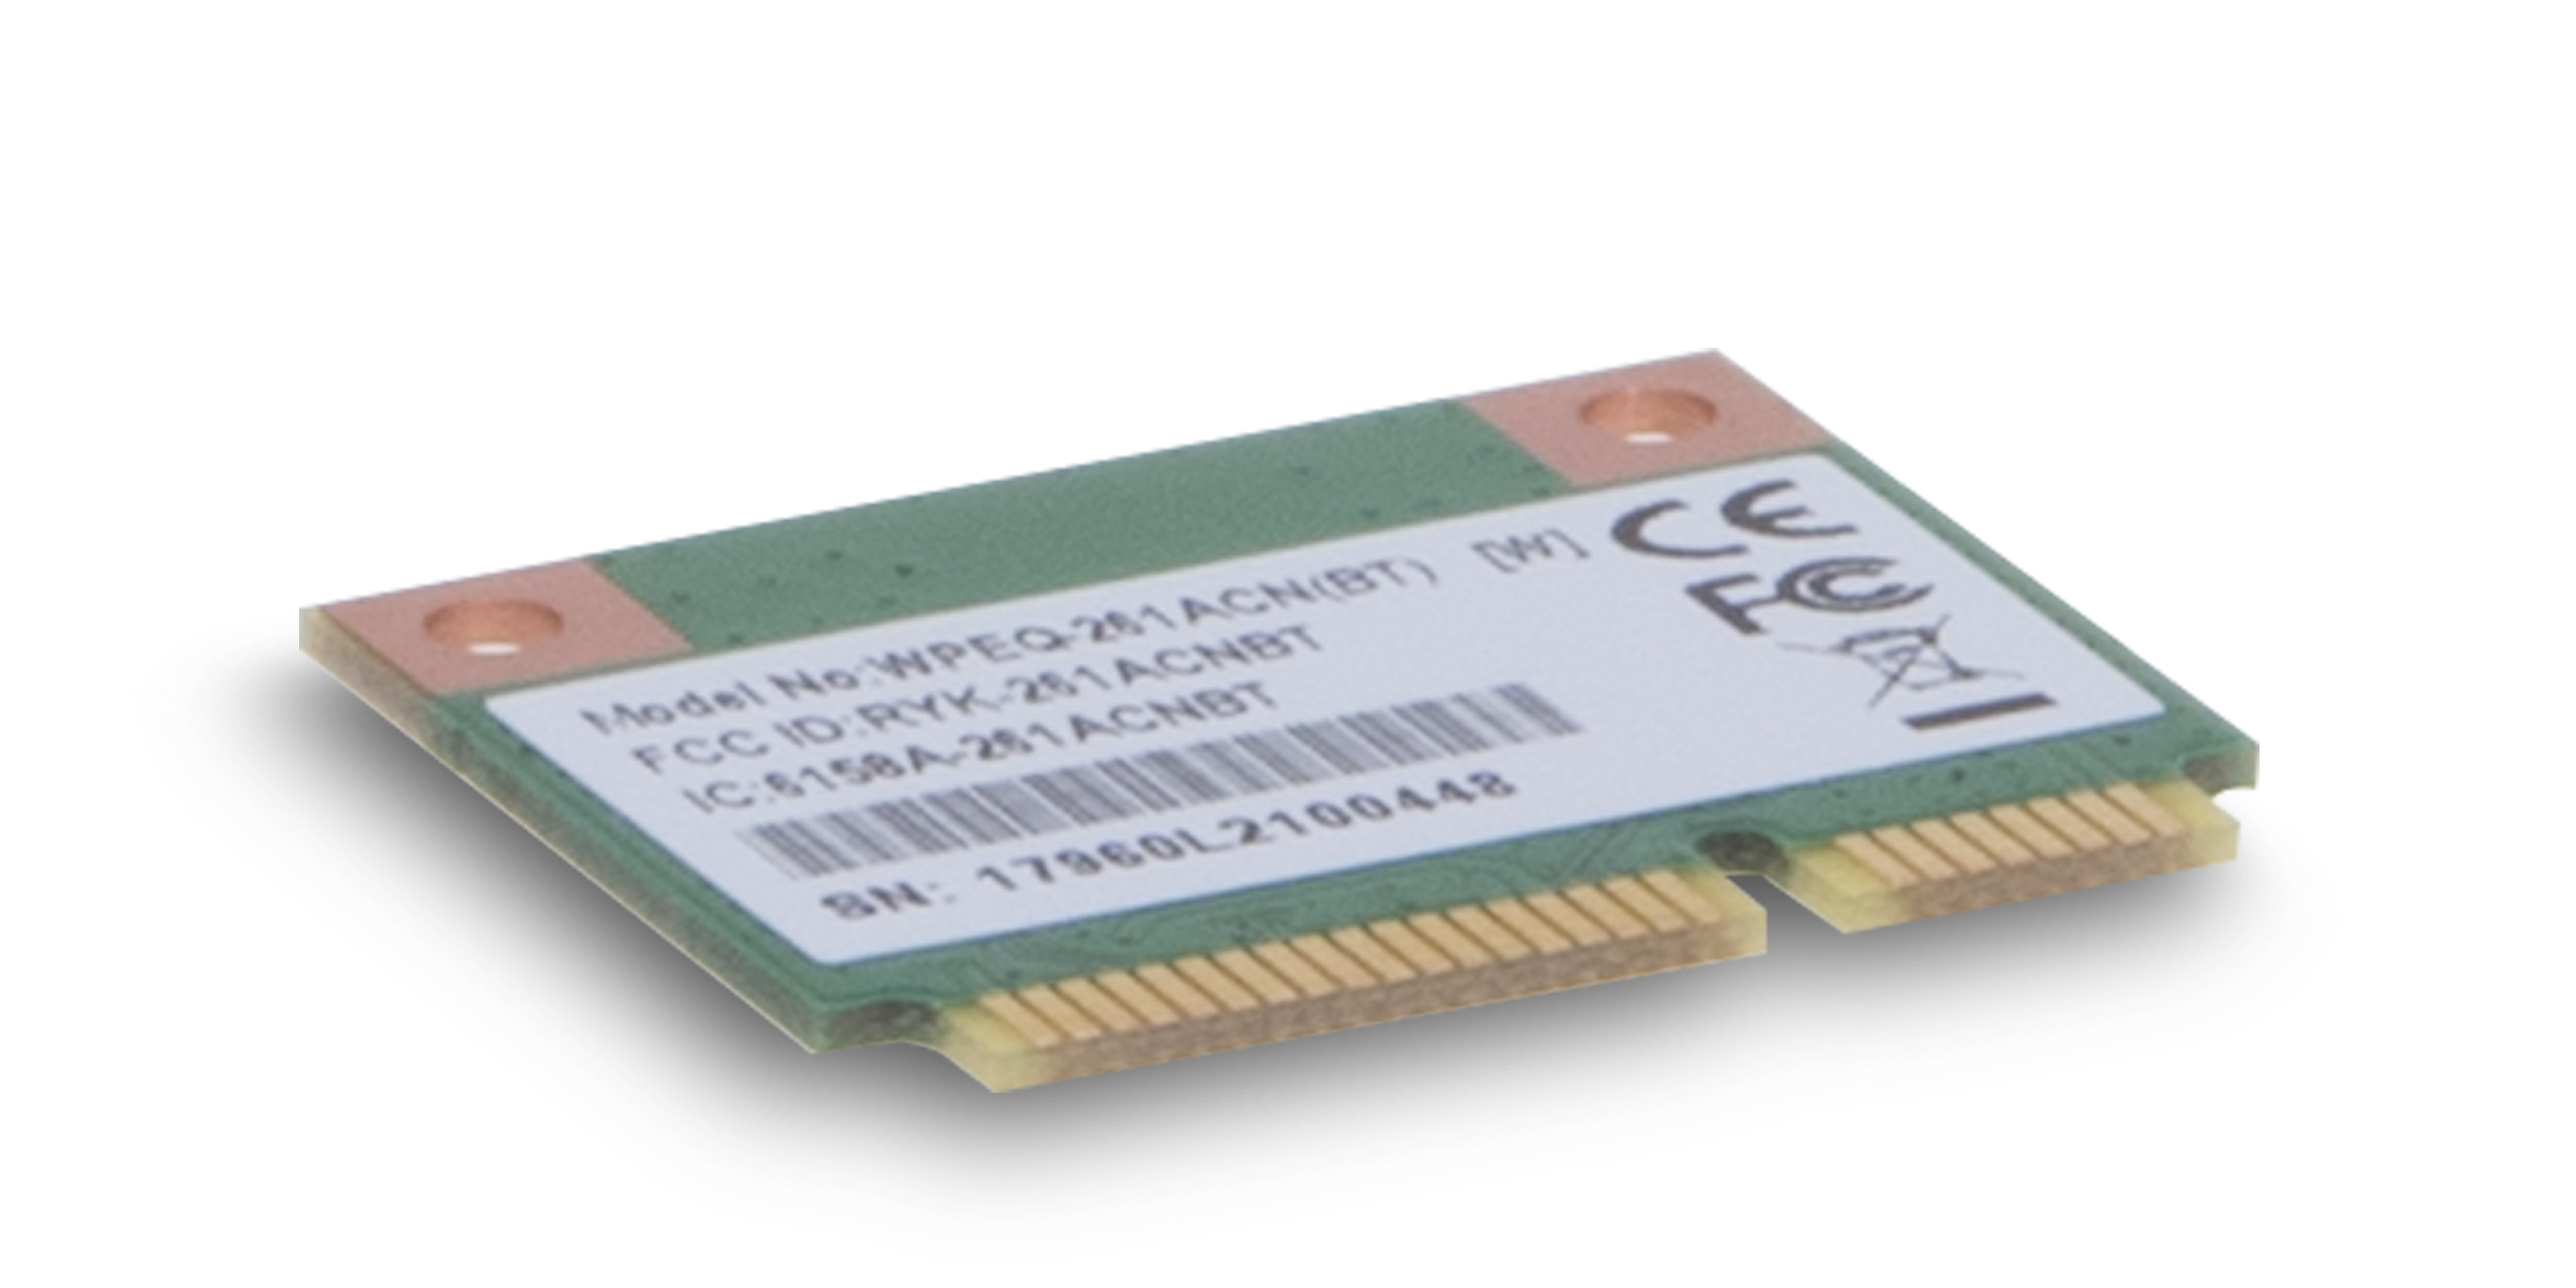 Sparklan Half Mini PCIe Modul WPEQ-263ACN (BT)